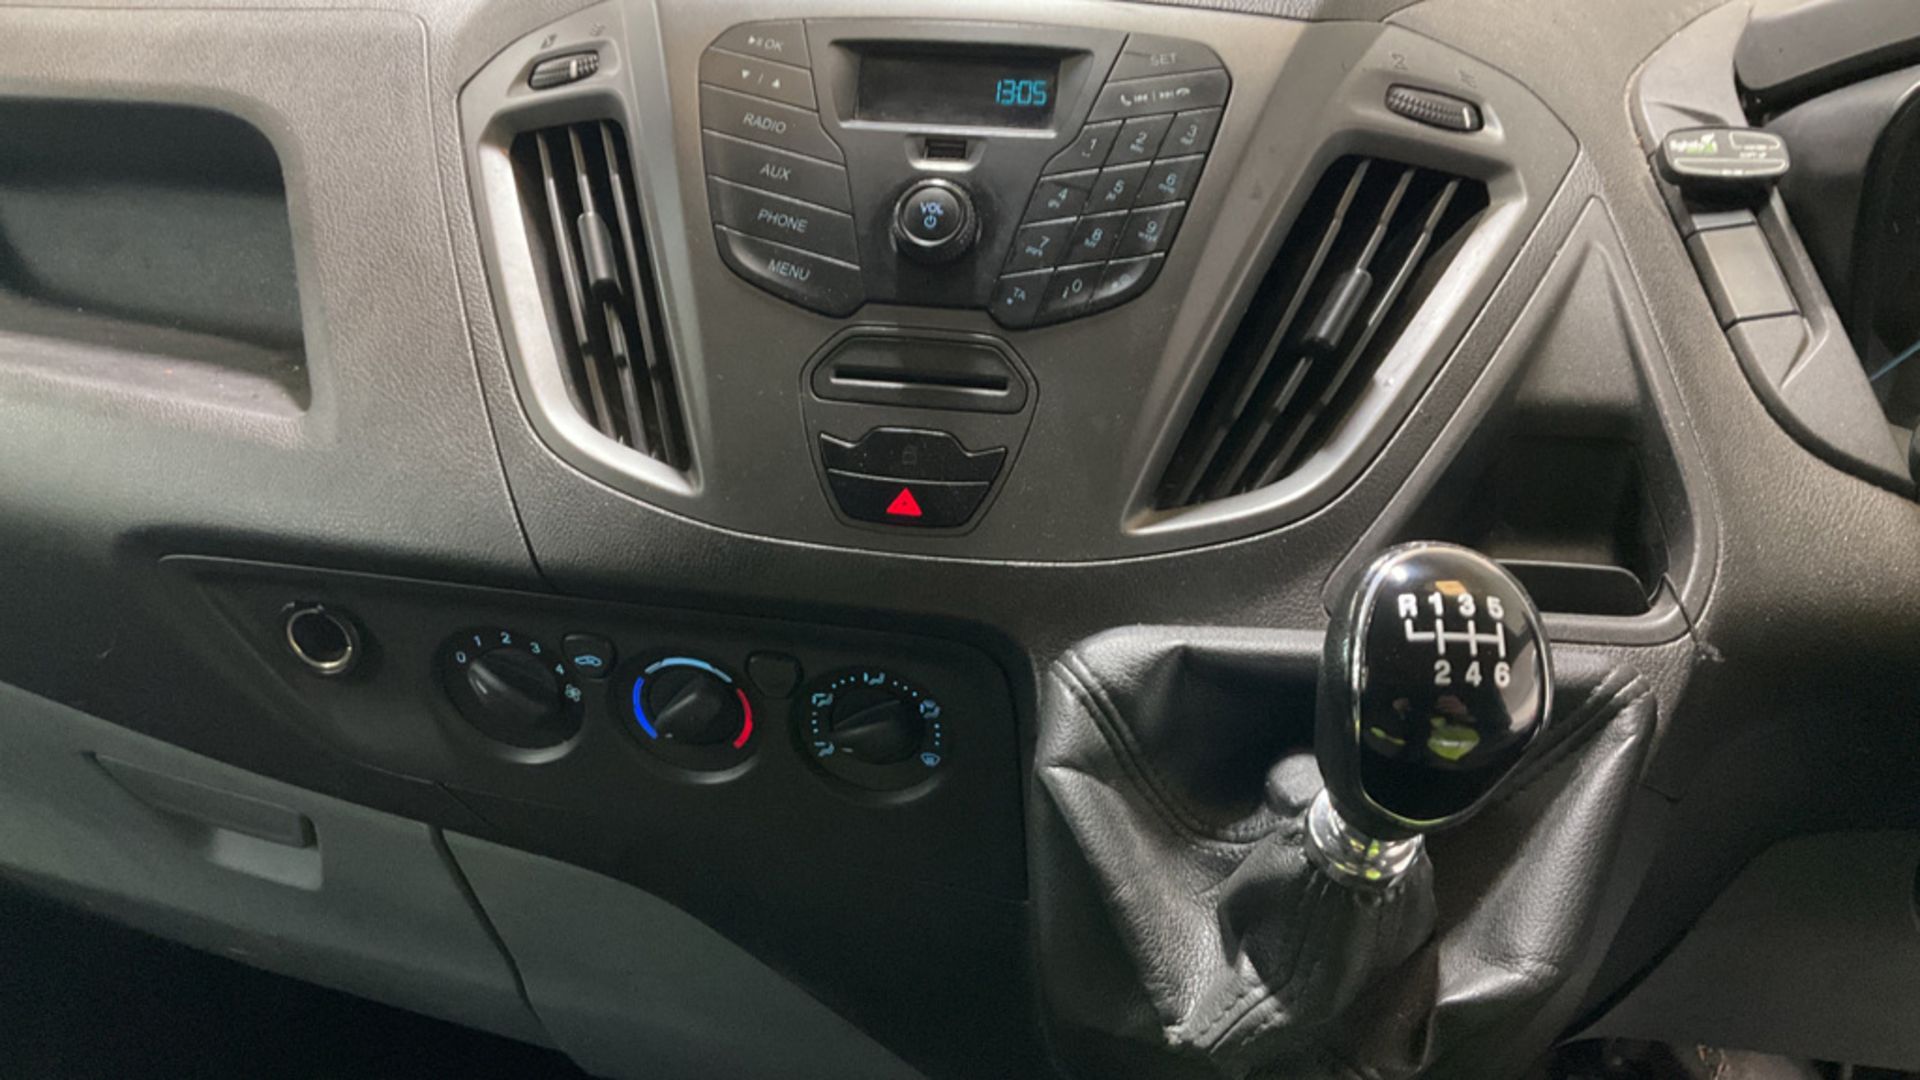 ** ON SALE ** Ford Transit Custom 2.2 TDCI Eco-Tech 2014 '14 Reg' Panel Van - Panel Van - No Vat - Image 7 of 9